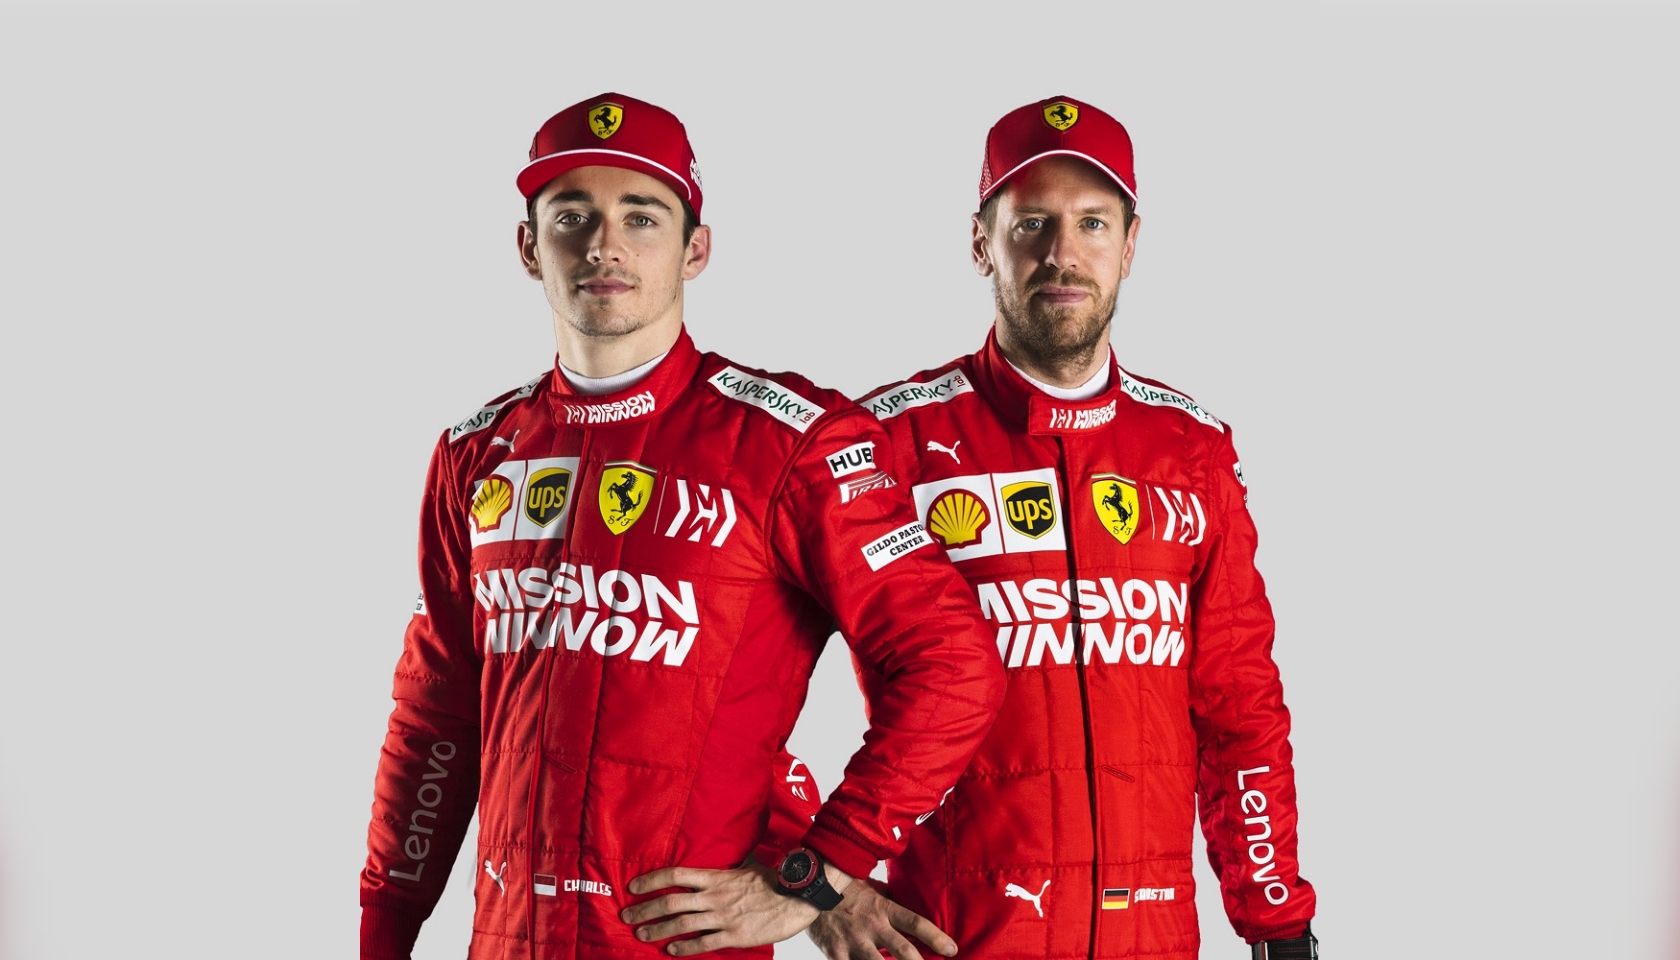 Cappellino Ferrari autografato da Charles Leclerc e Sebastian